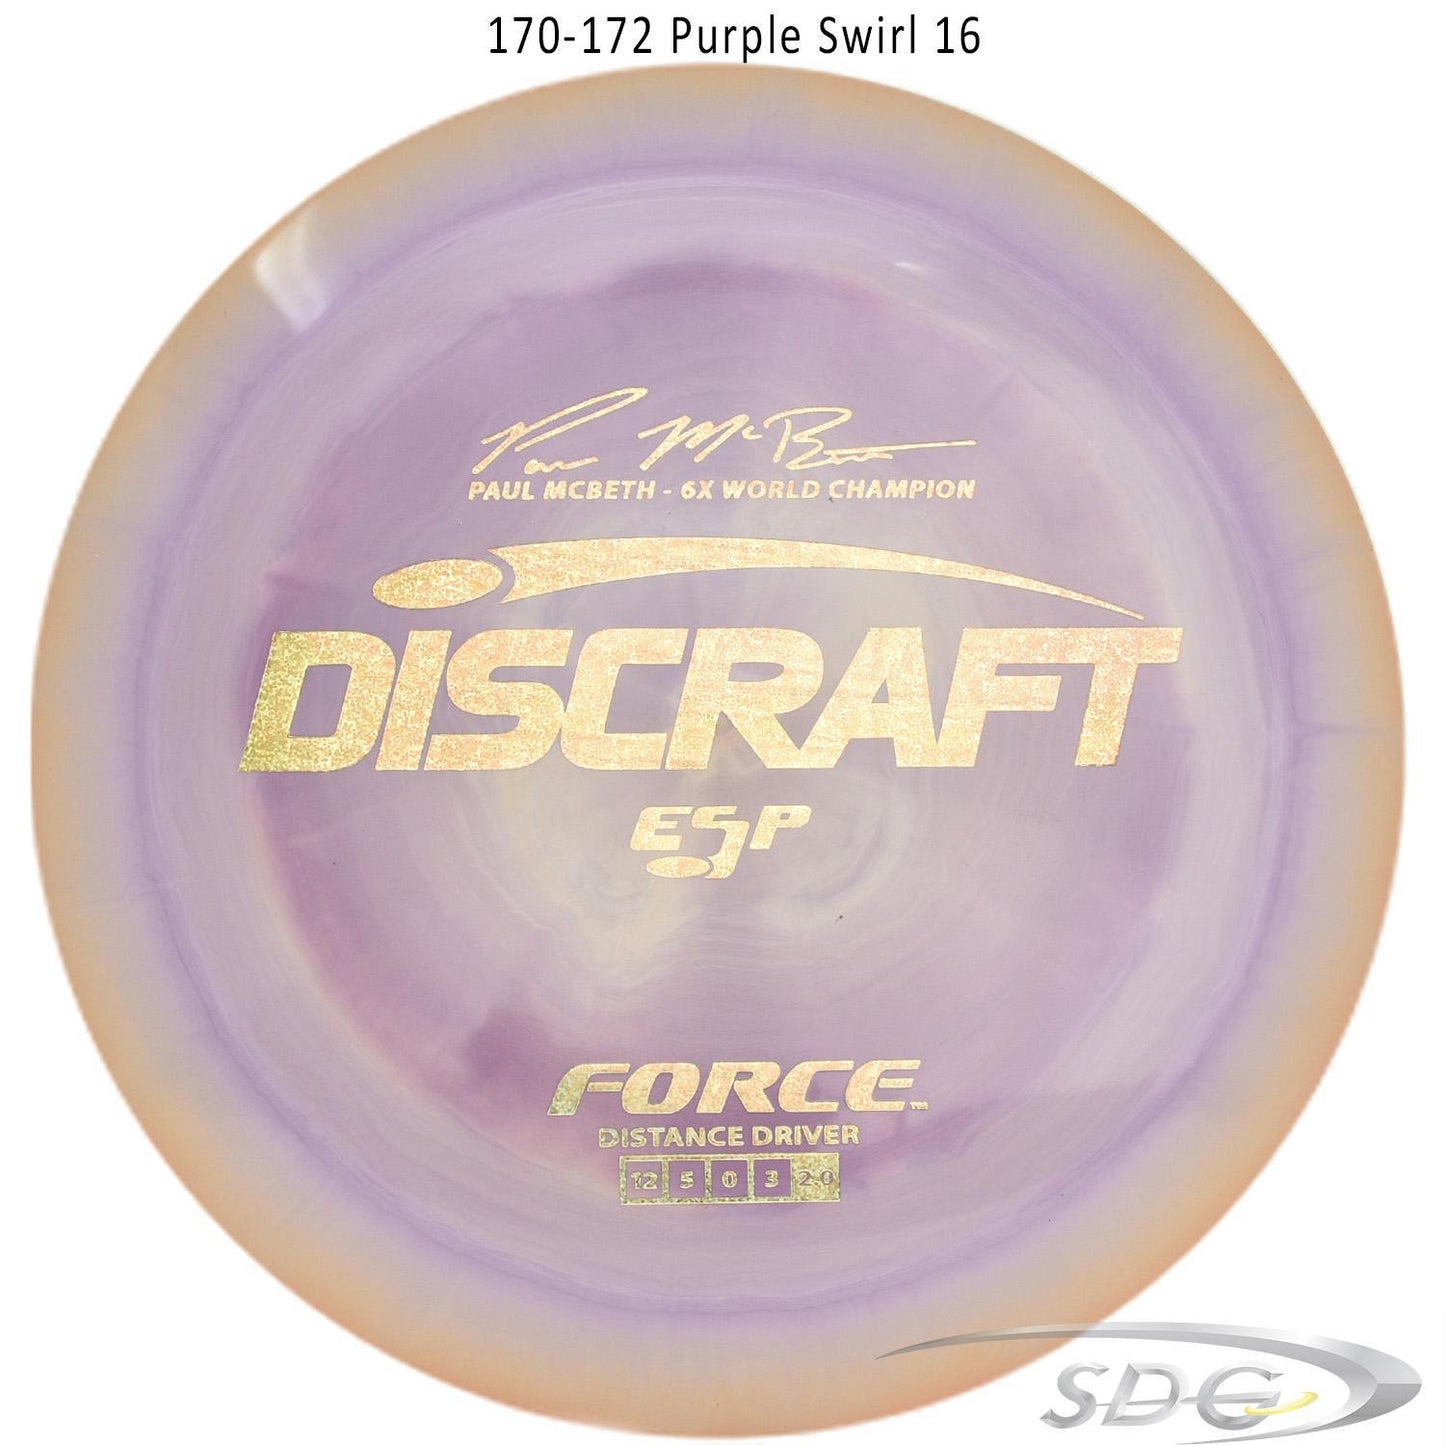 discraft-esp-force-6x-paul-mcbeth-signature-disc-golf-distance-driver 170-172 Purple Swirl 16